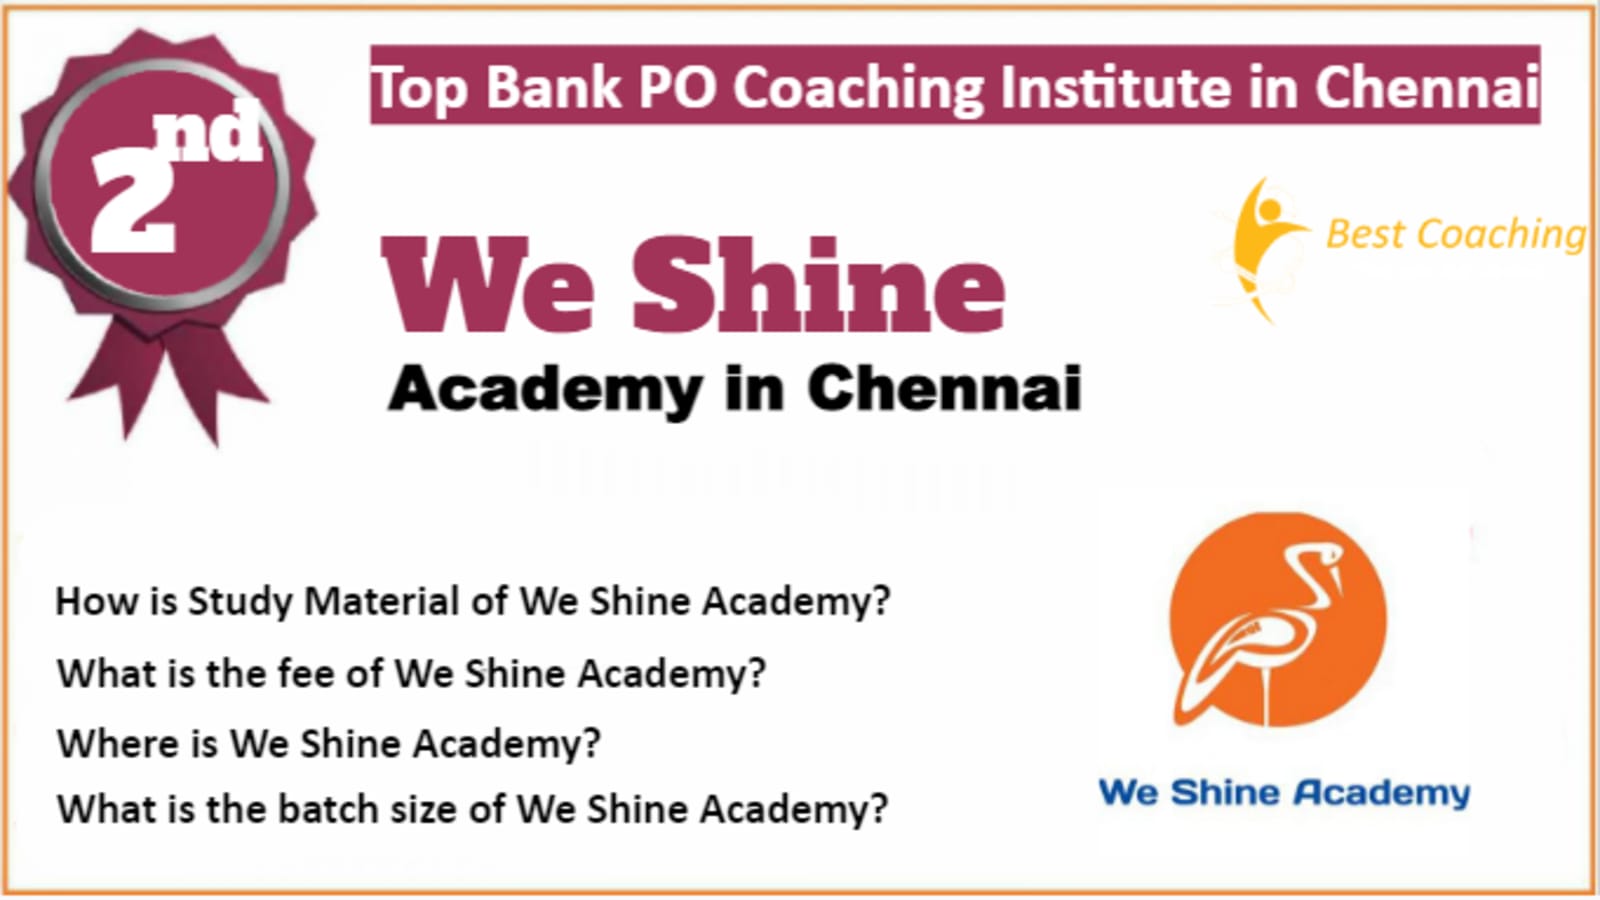 Rank 2 Best Bank PO Coaching In Chennai